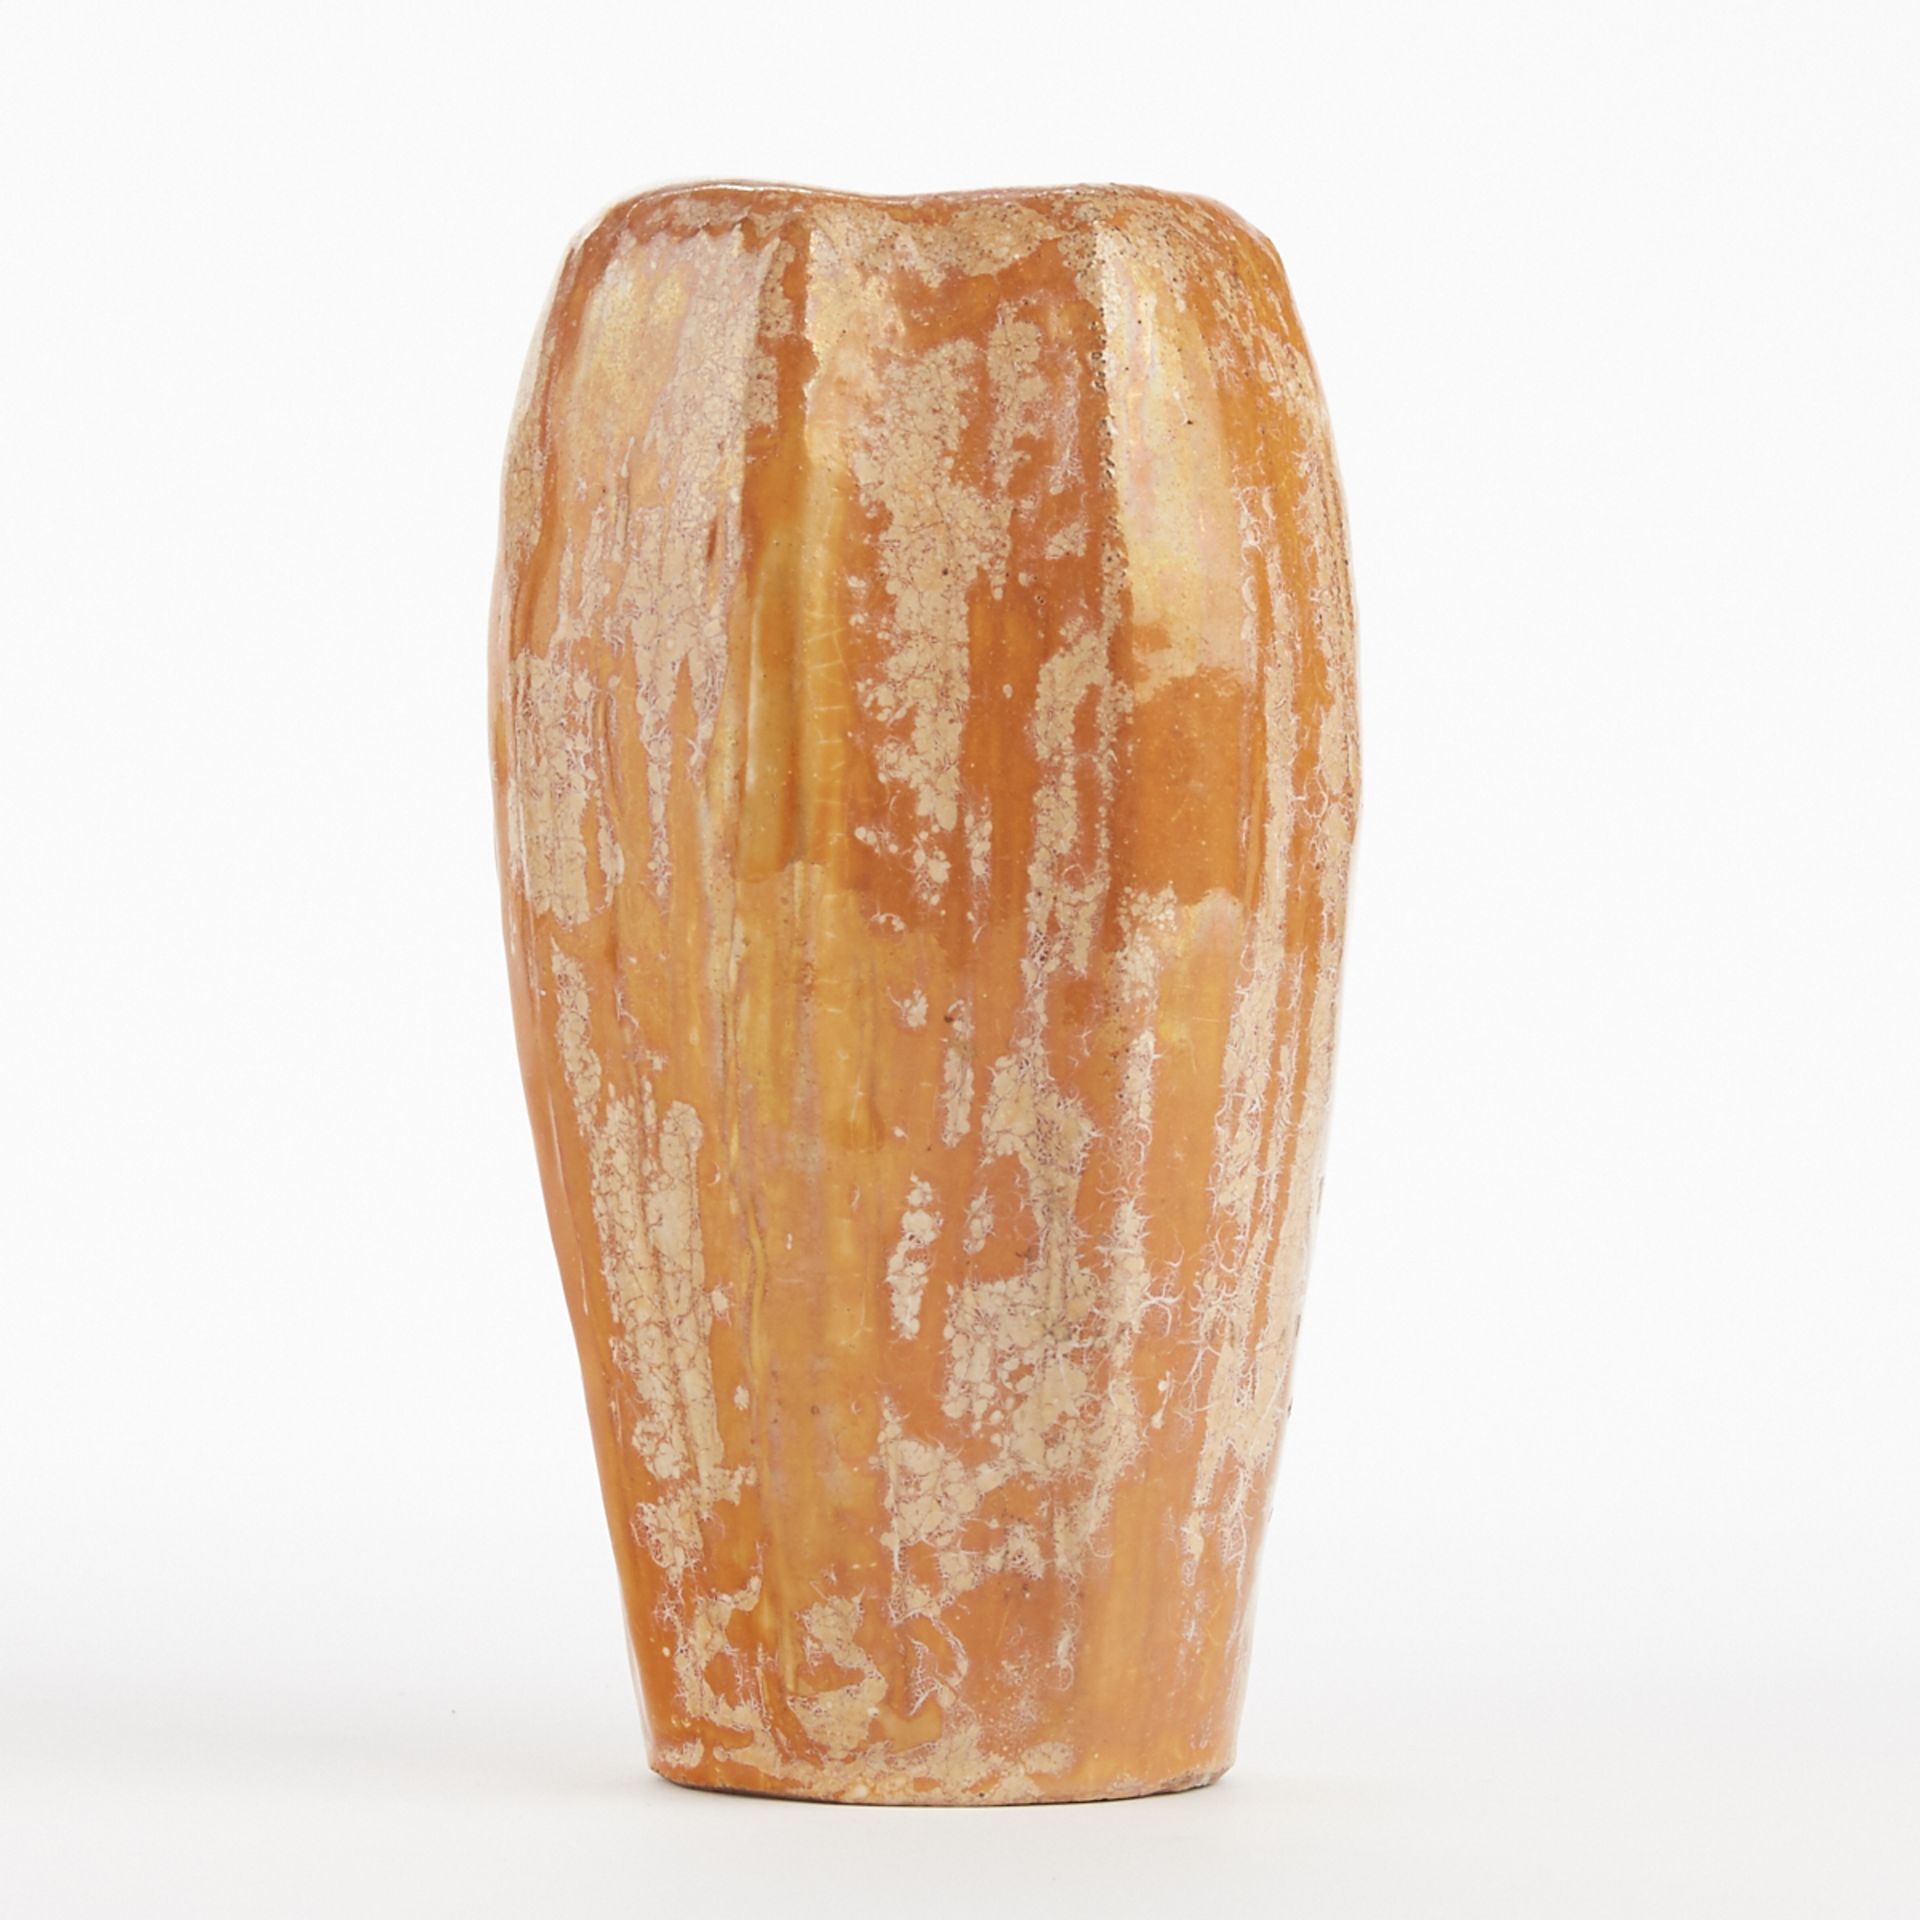 Arequipa Rhead Art Pottery Crystalline Organic Vase - Image 5 of 6